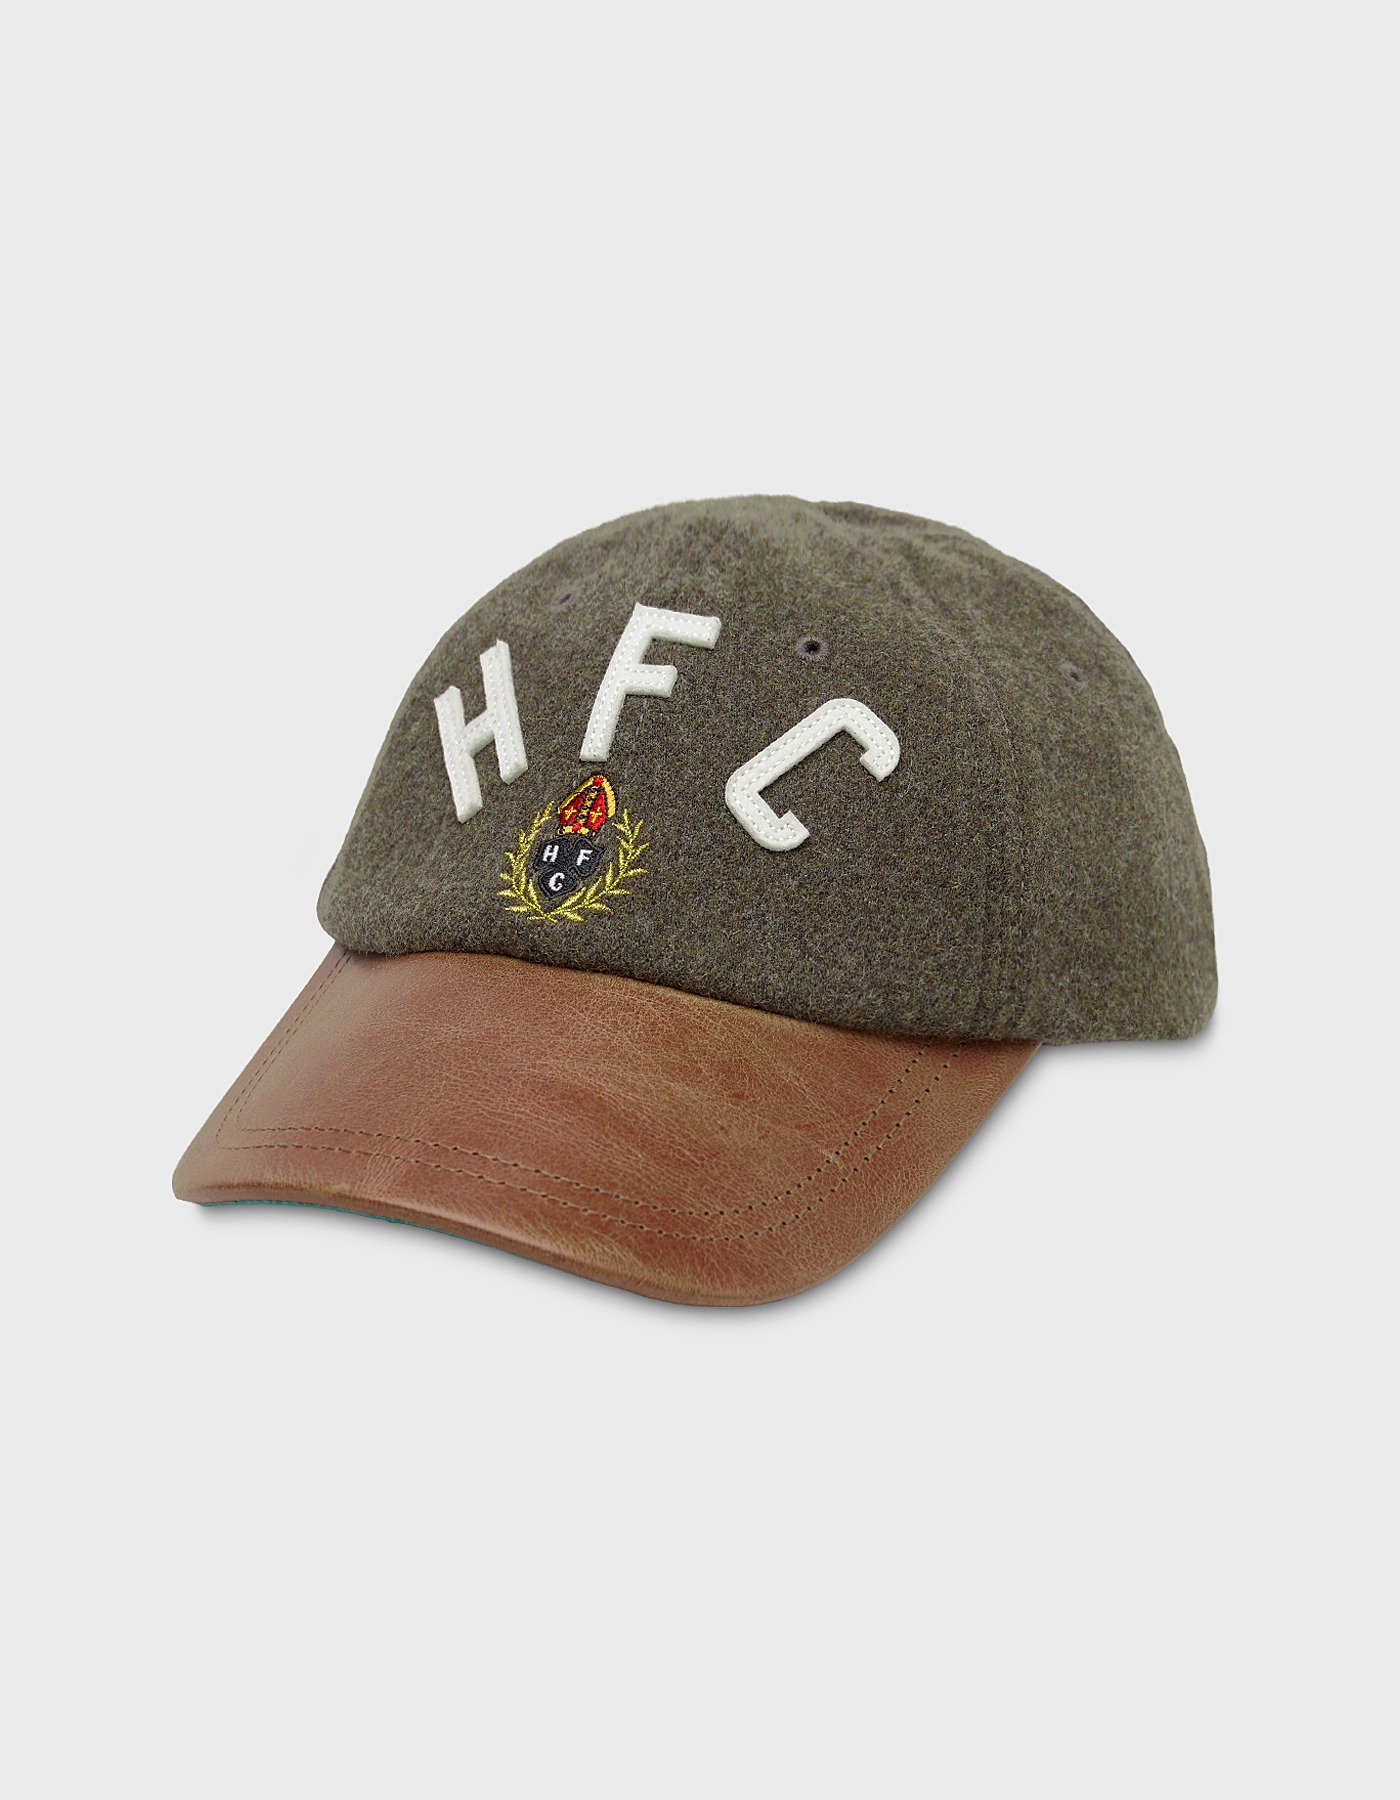 HFC CREST FELT WOOL LEATHER CAP / Khaki